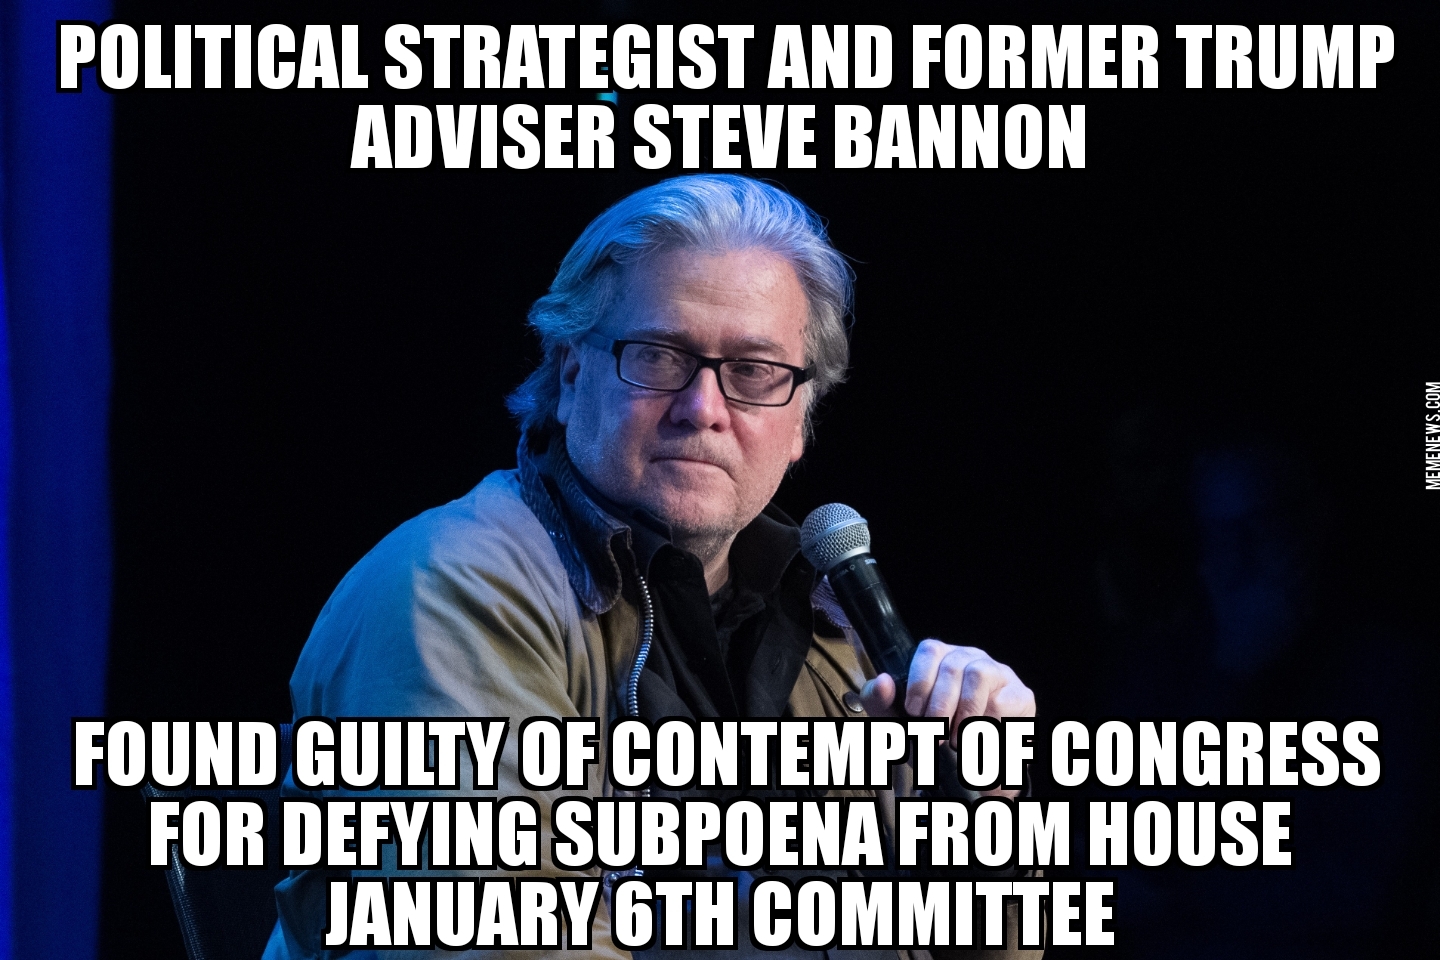 Steve Bannon guilty of contempt of Congress